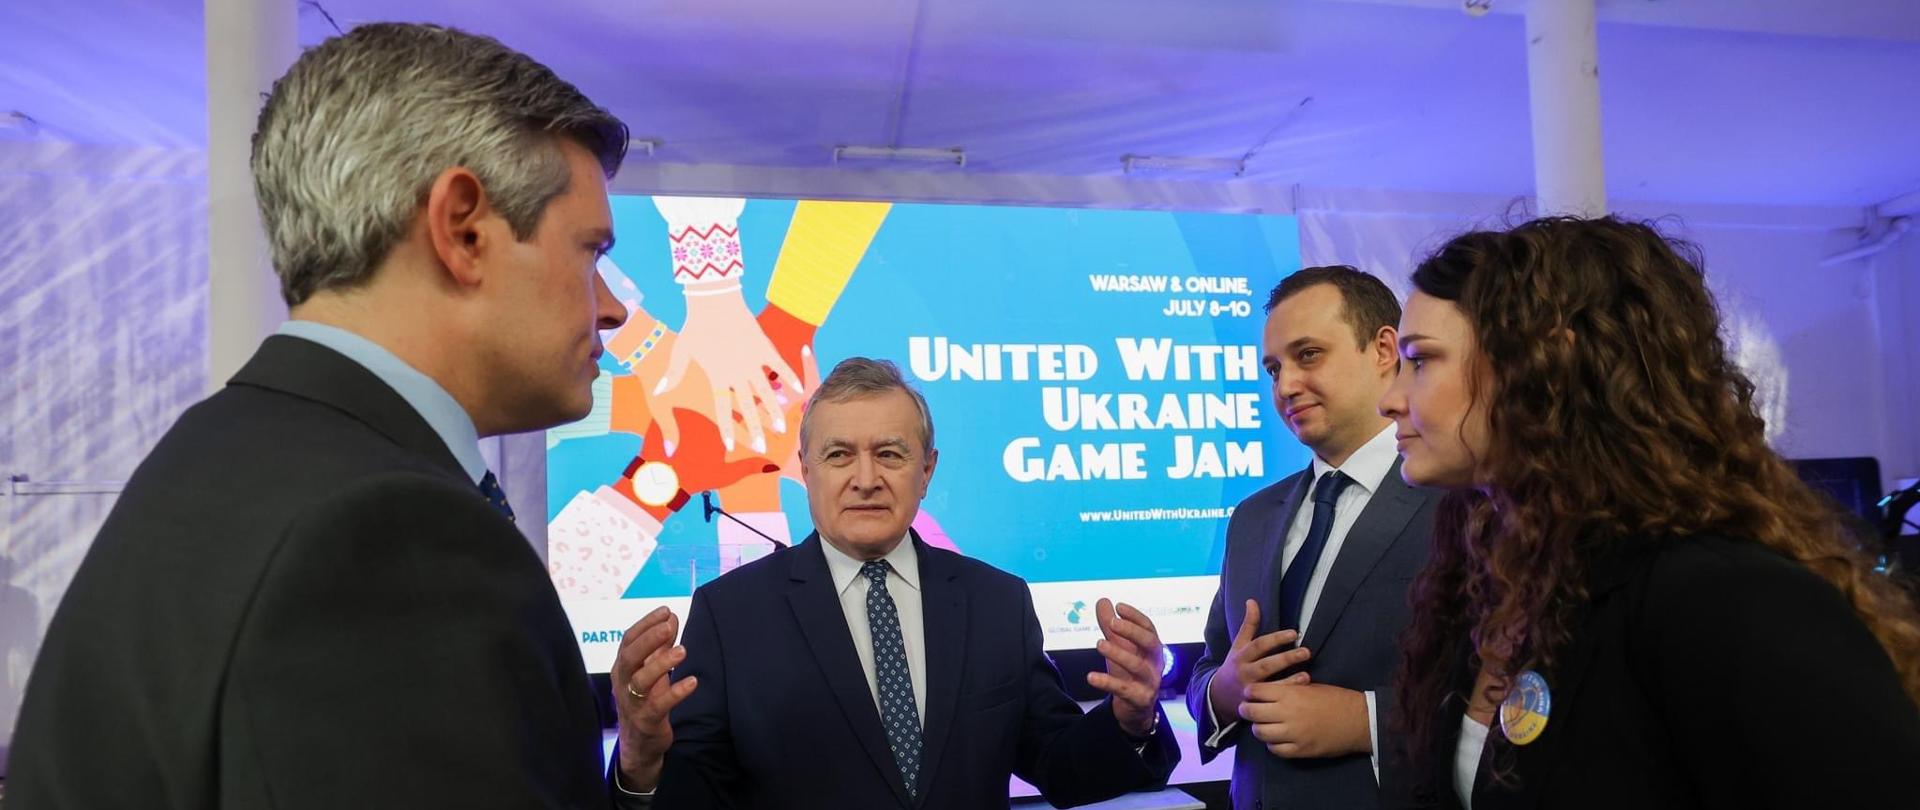 PiotrGlinski, Justyna Orłowska, Erik Catalfamo i MikołajTurowski na tle United with Ukraine Game Jam.